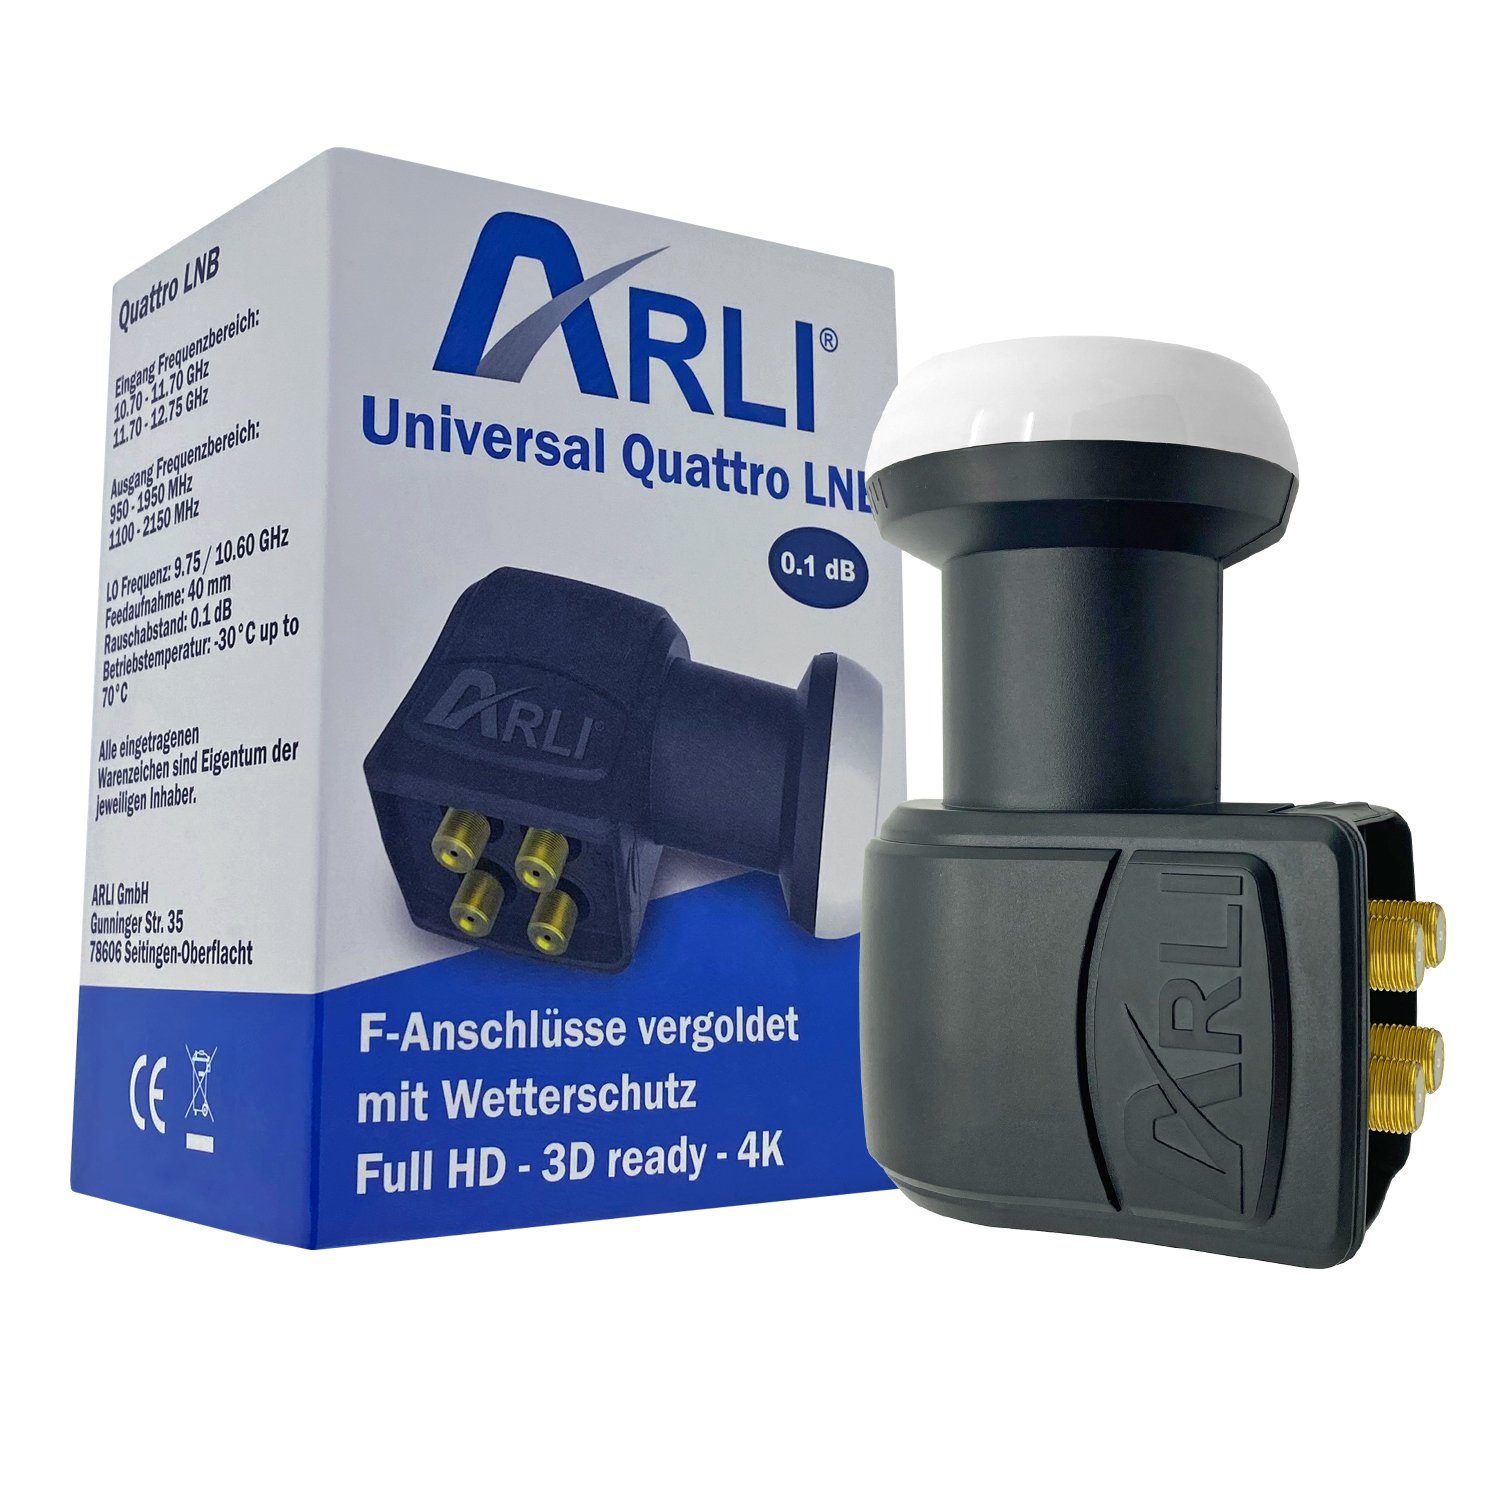 ARLI Universal Quattro LNB 0.1dB für Multischalter Universal-Quattro-LNB (für 4 Teilnehmer) Schwarz - 2 Stück